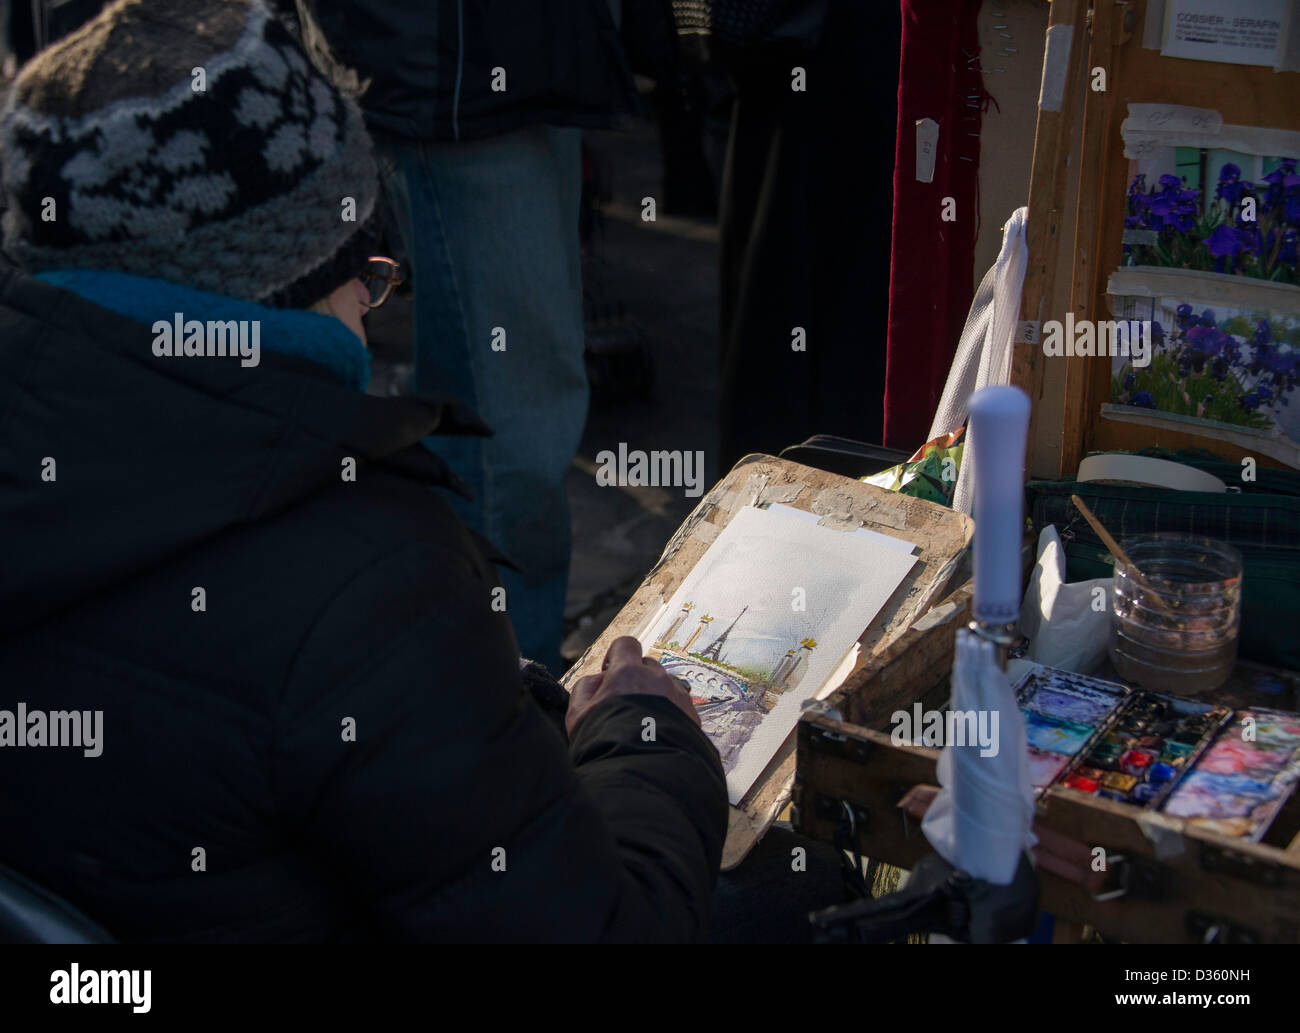 Artist bundled up against the cold, Montmartre, Paris, France Stock Photo